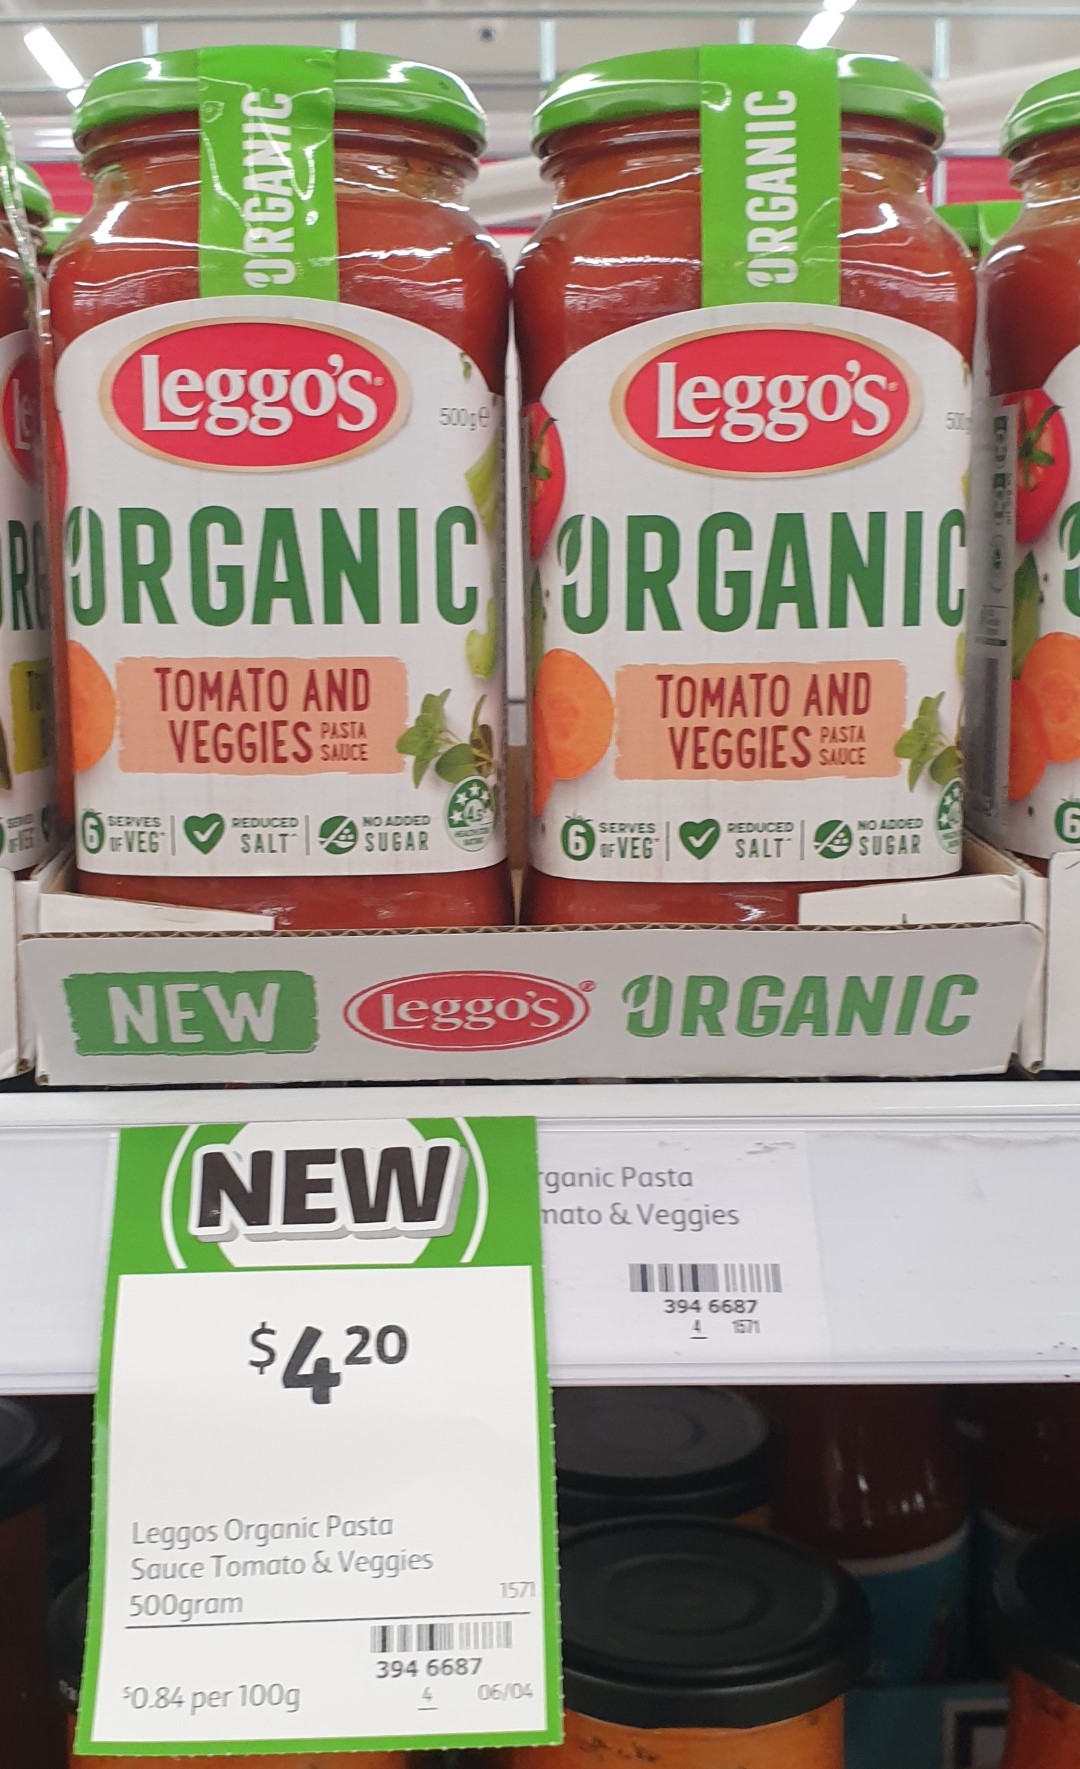 Leggos 500g Pasta Sauce Organic Tomato And Veggies